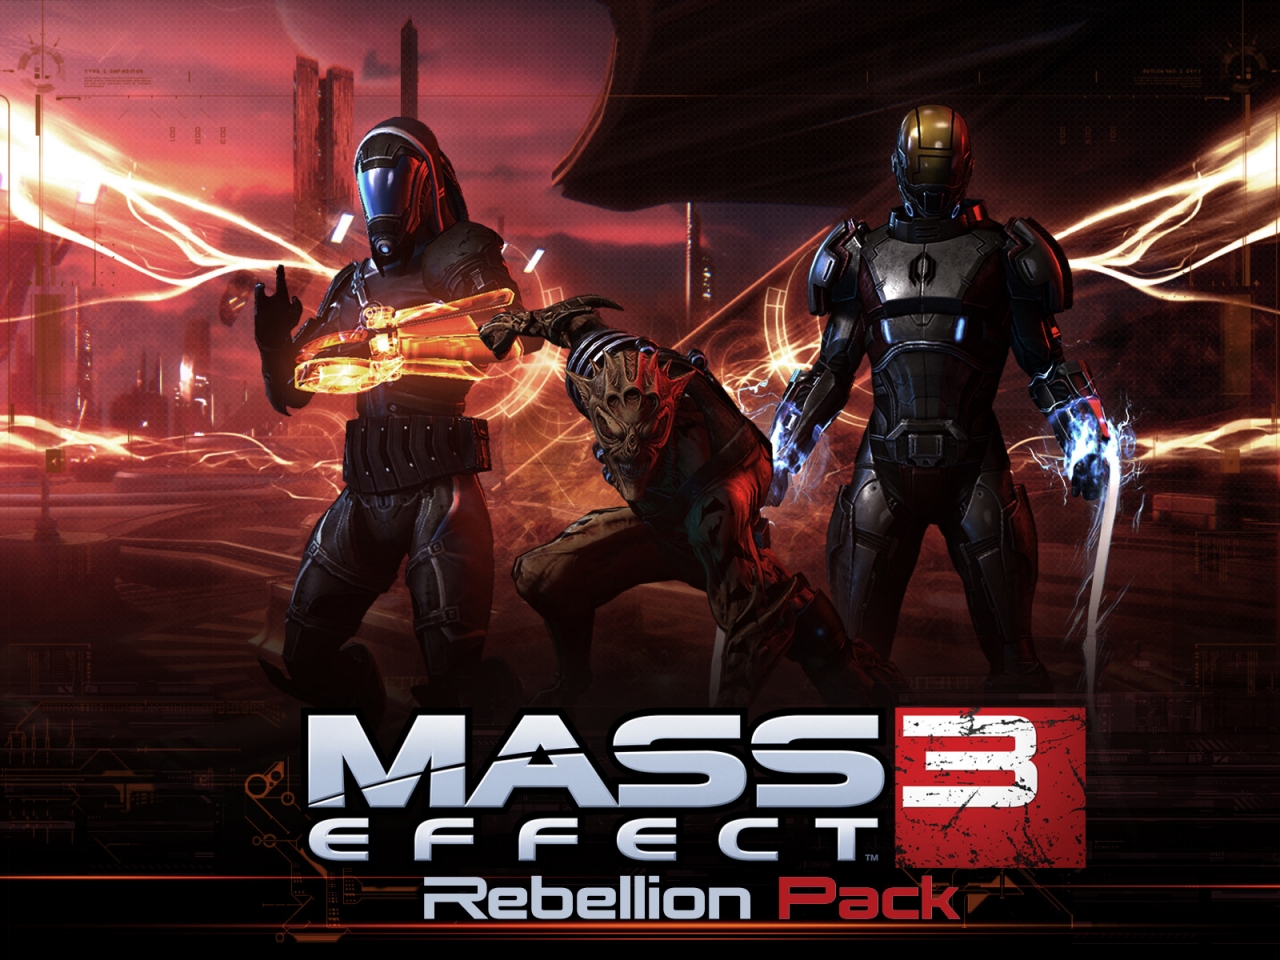 Mass Effect 3 Rebellion Pack for 1280 x 960 resolution